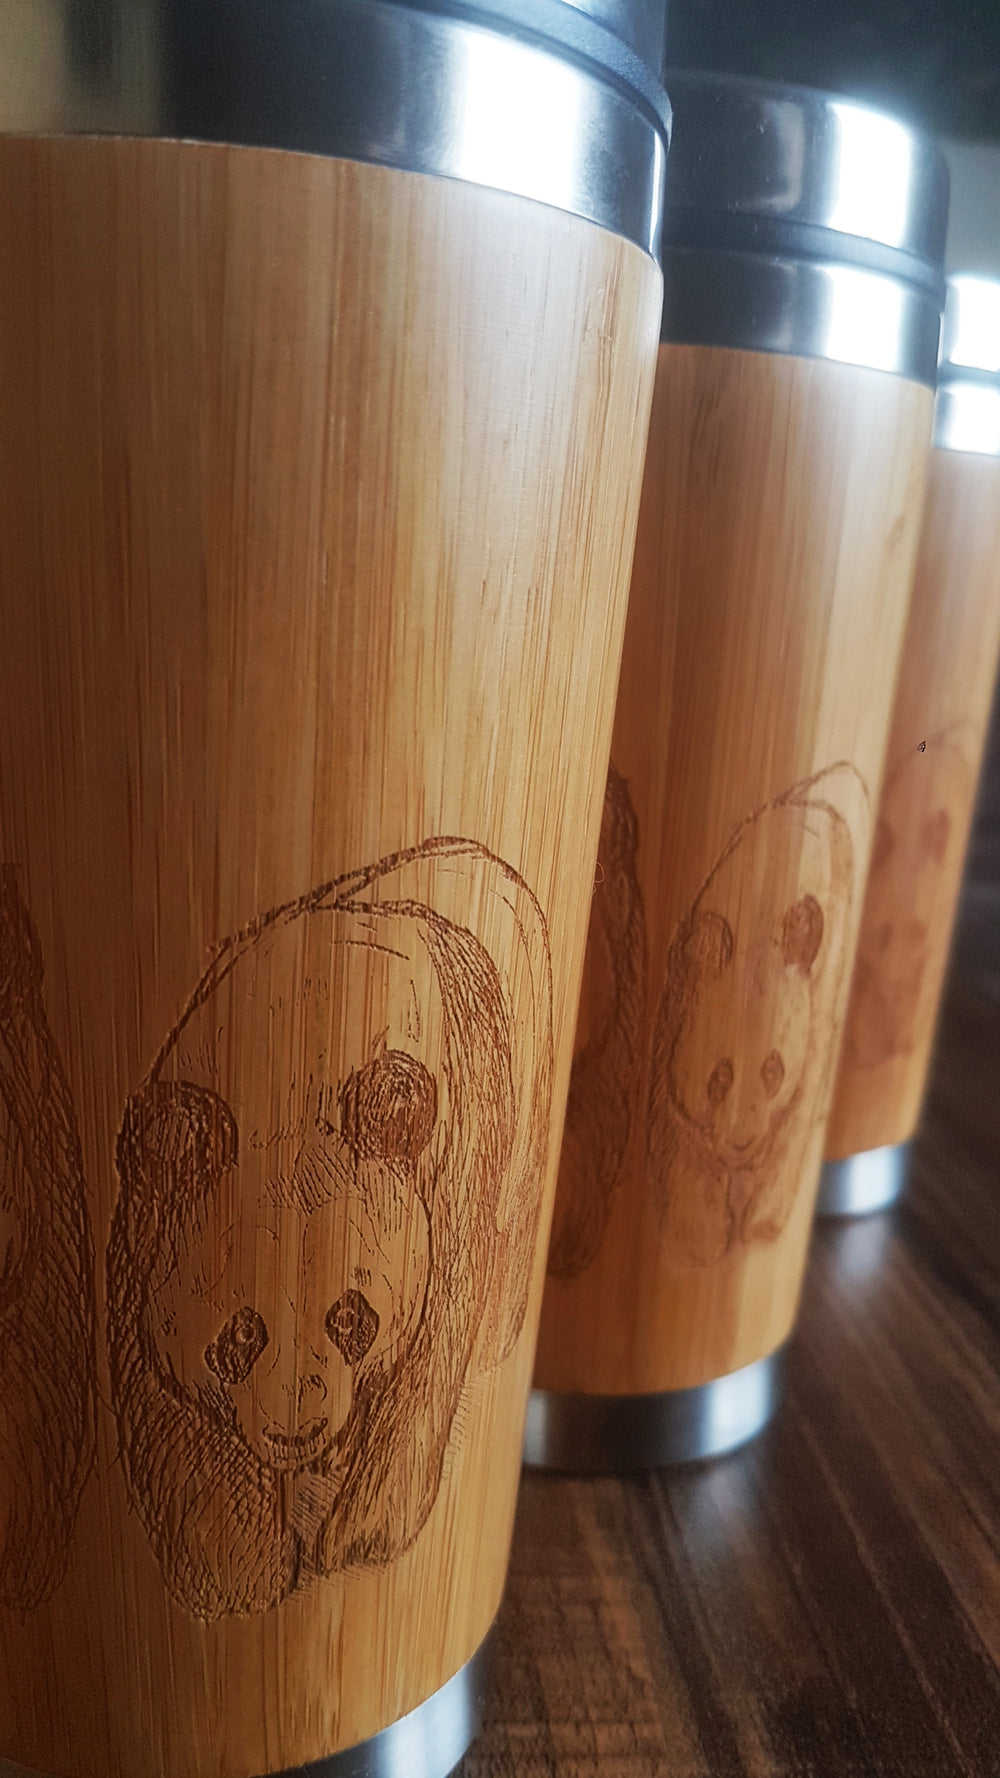 PANDAS Bamboo Wood Travel Mug Custom Engraved Tumbler